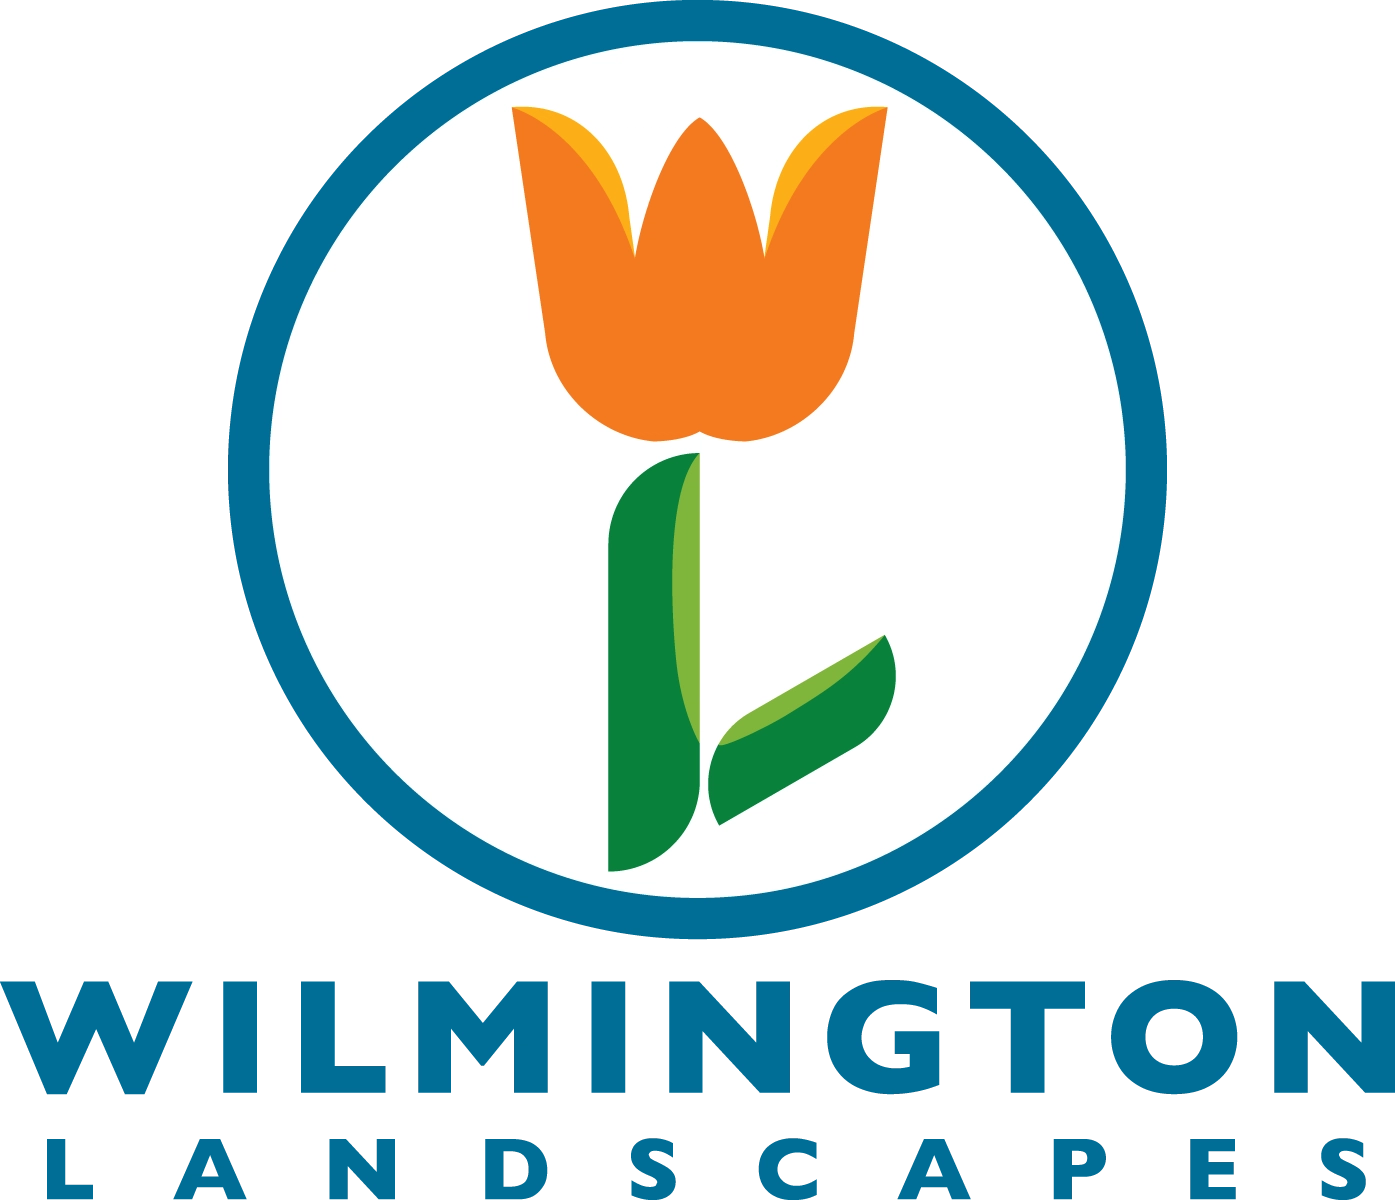 Wilmington Landscapes Logo